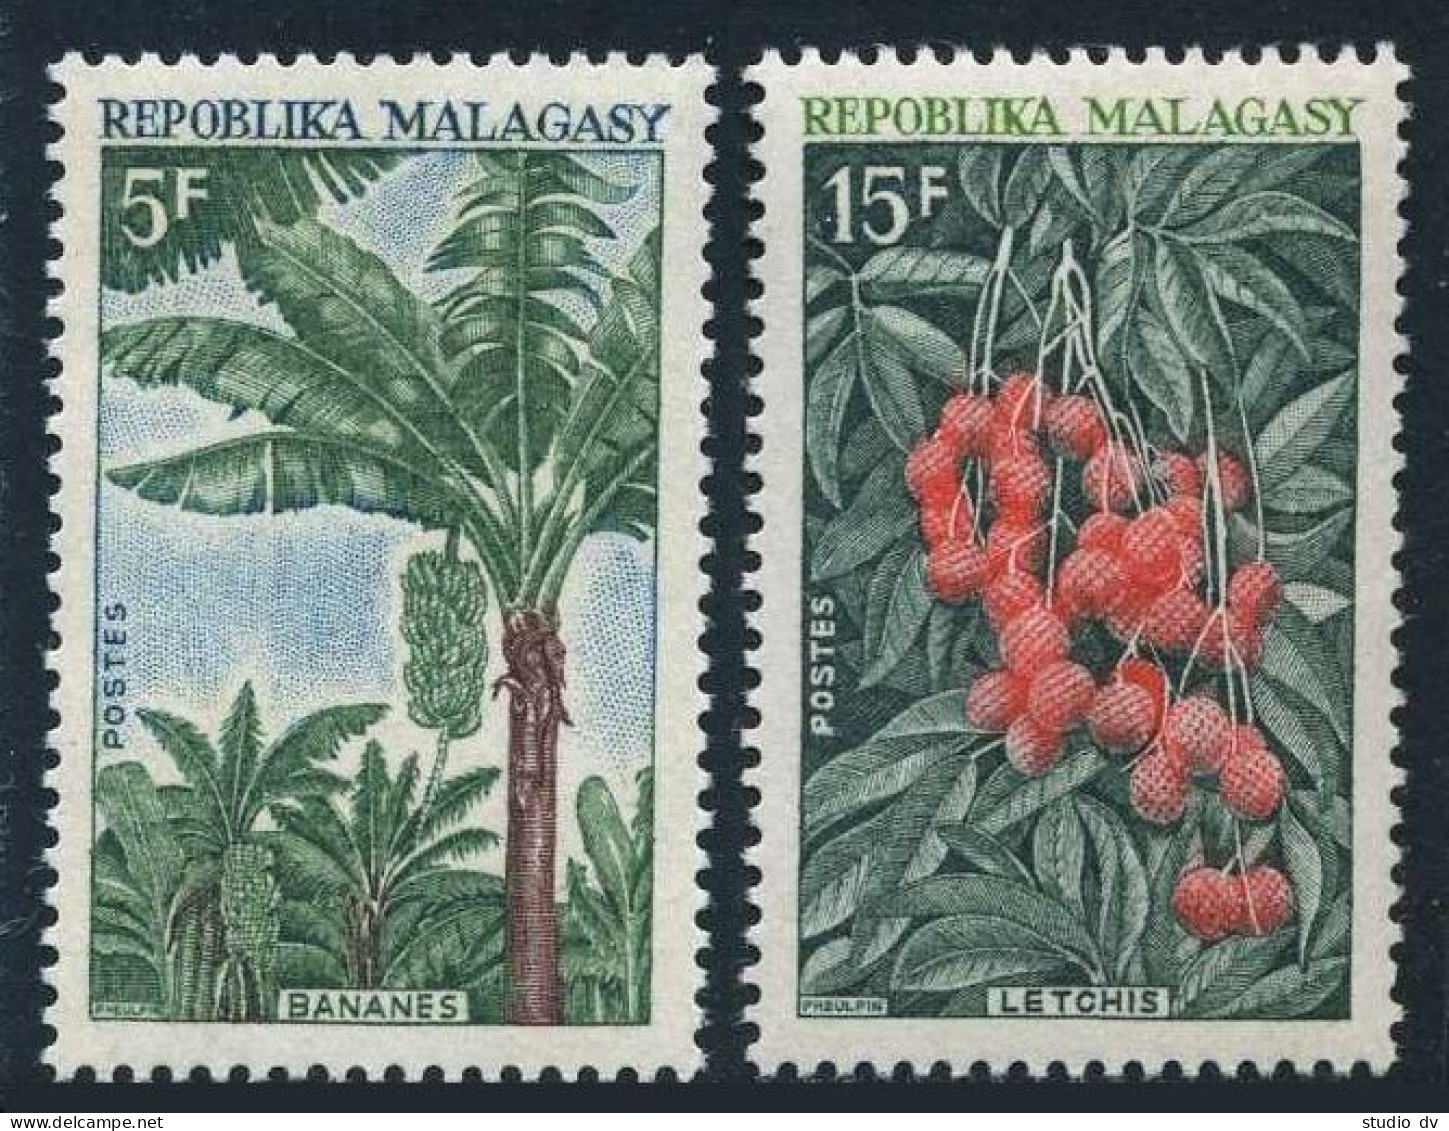 Malagasy 427-428, MNH. Michel 603-604. Banana Plants, Lichi Tree, 1969. - Madagascar (1960-...)